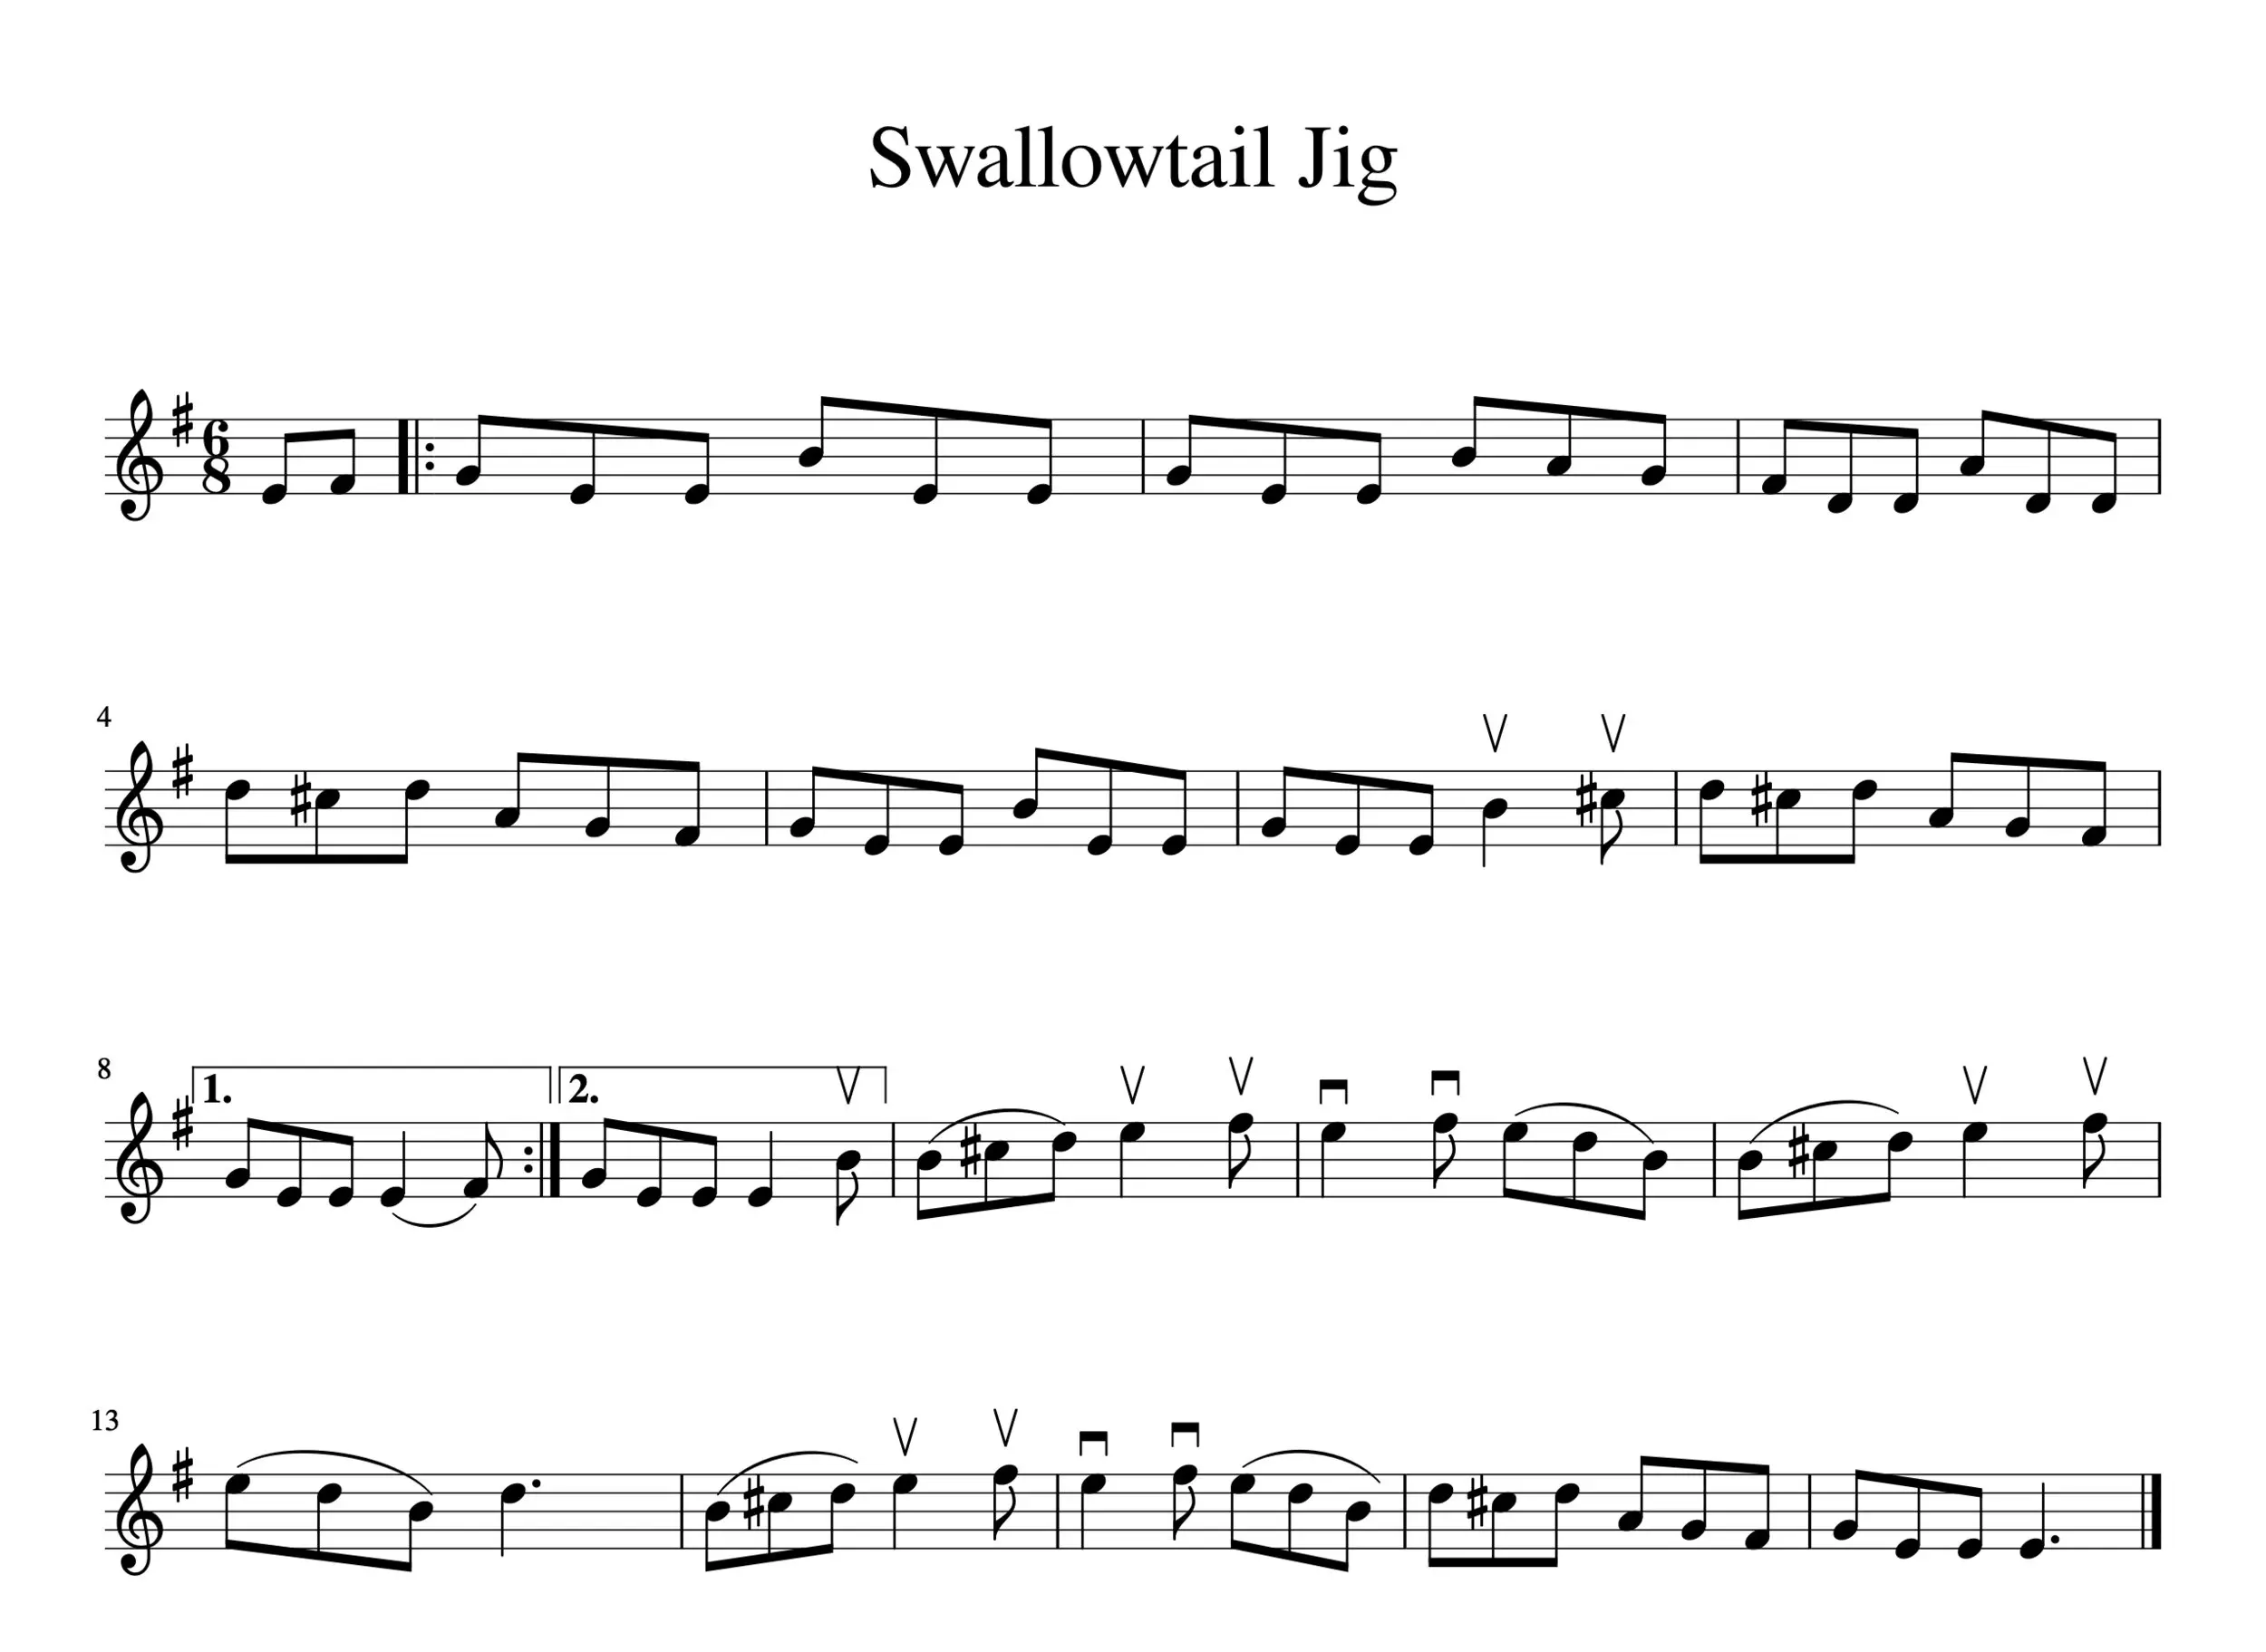 swallowtail jig partitura violin - When was the swallowtail jig written